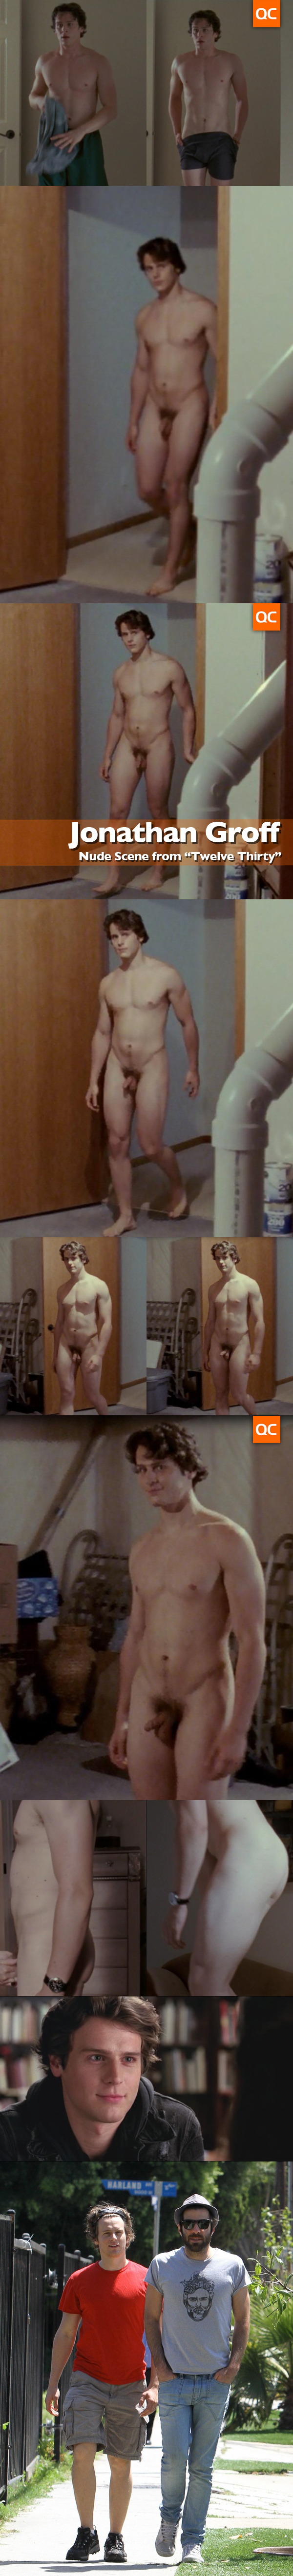 Glee's Jonathan Groff Nude!